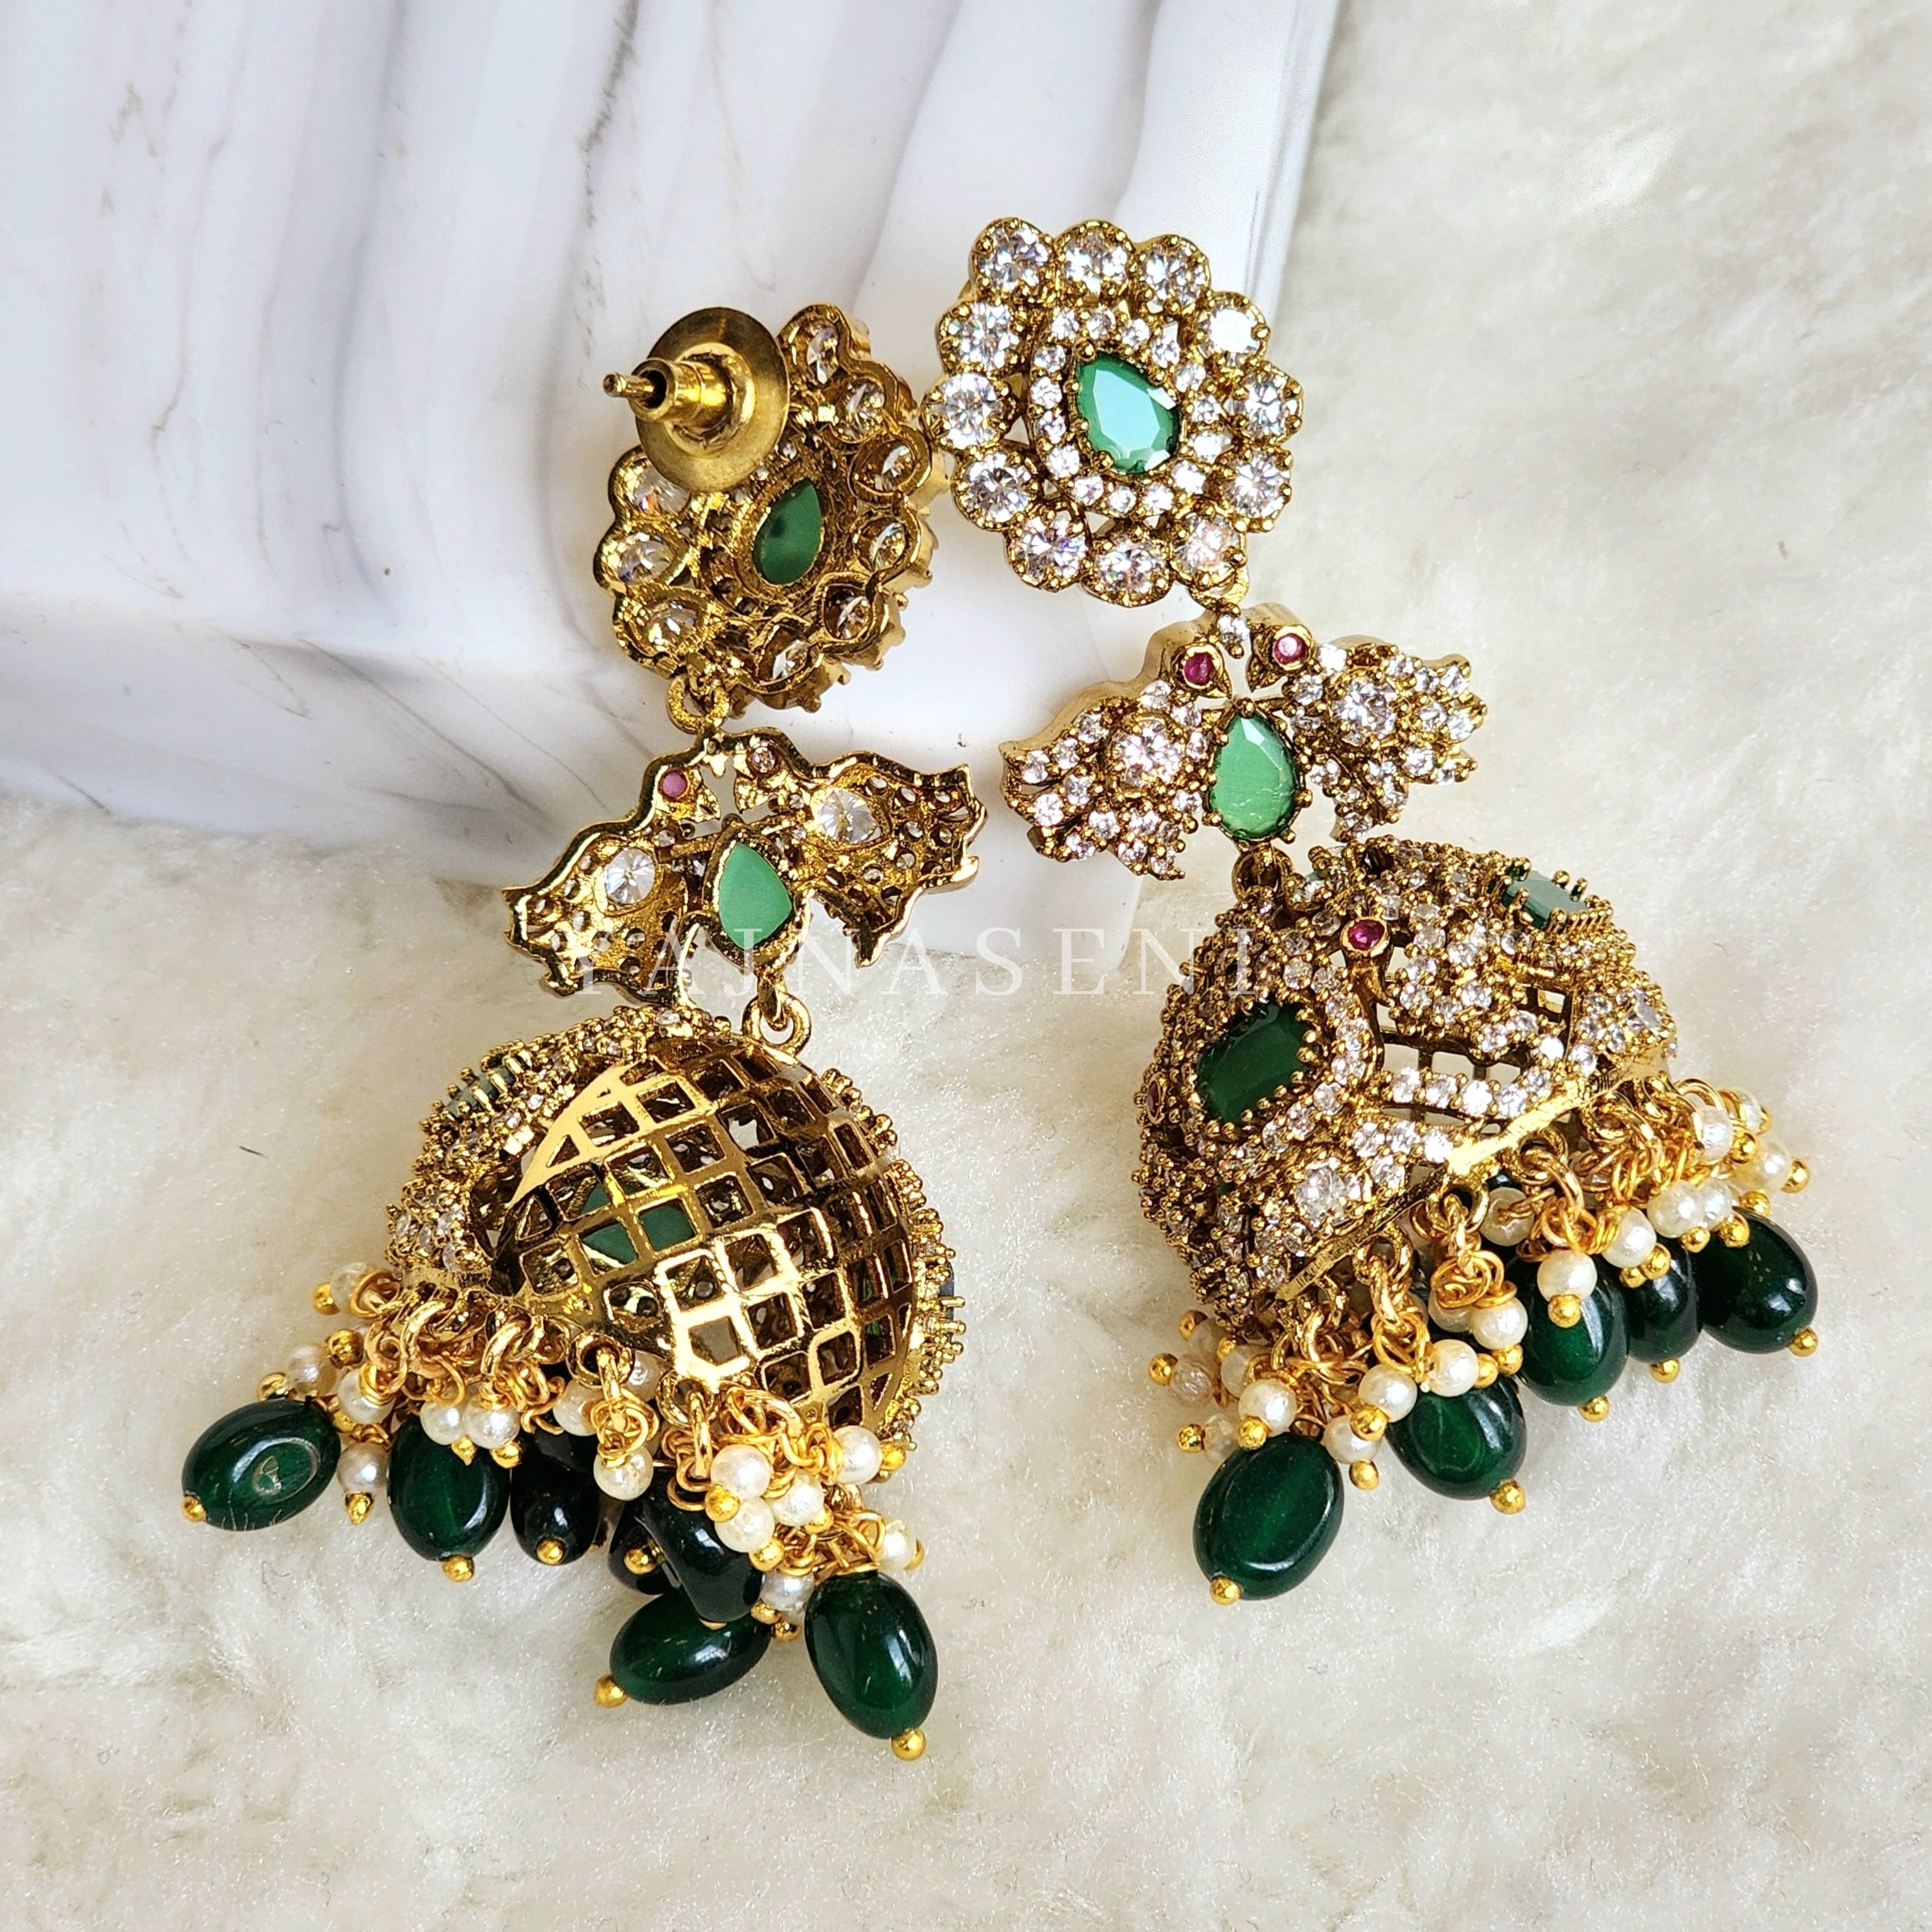 IVANA earrings